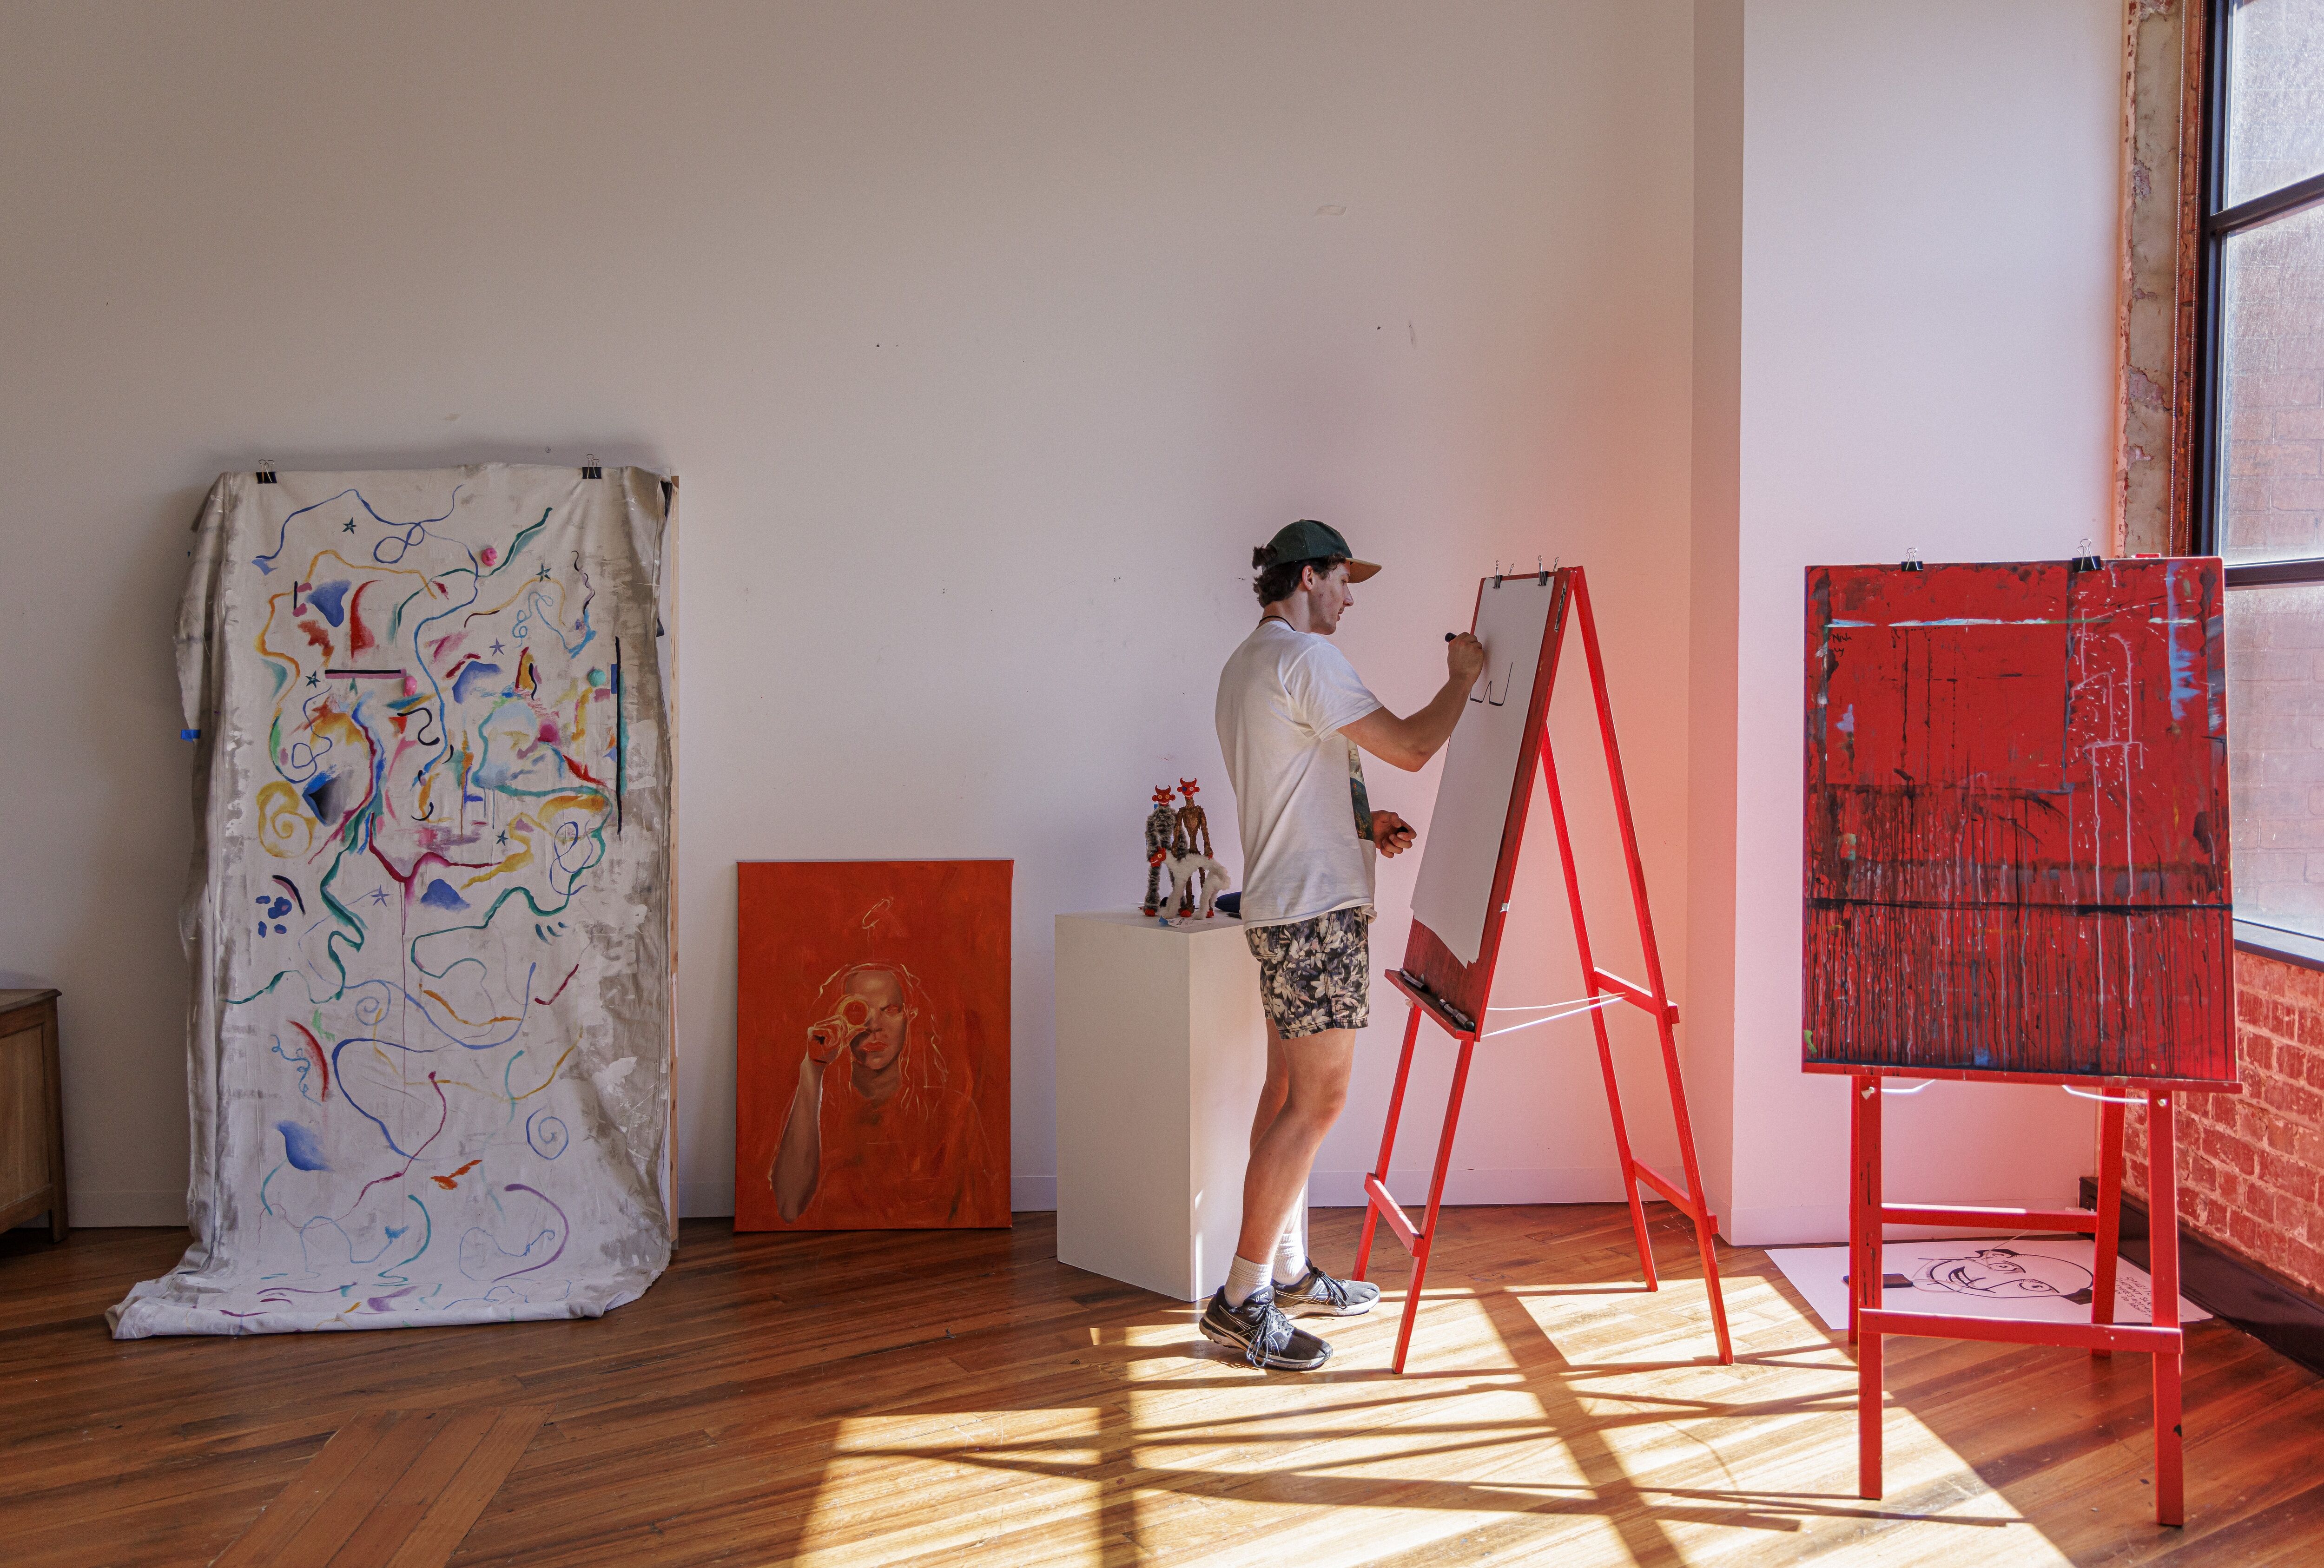 Un artista dibuja en un caballete entre pinturas vibrantes en un estudio soleado.